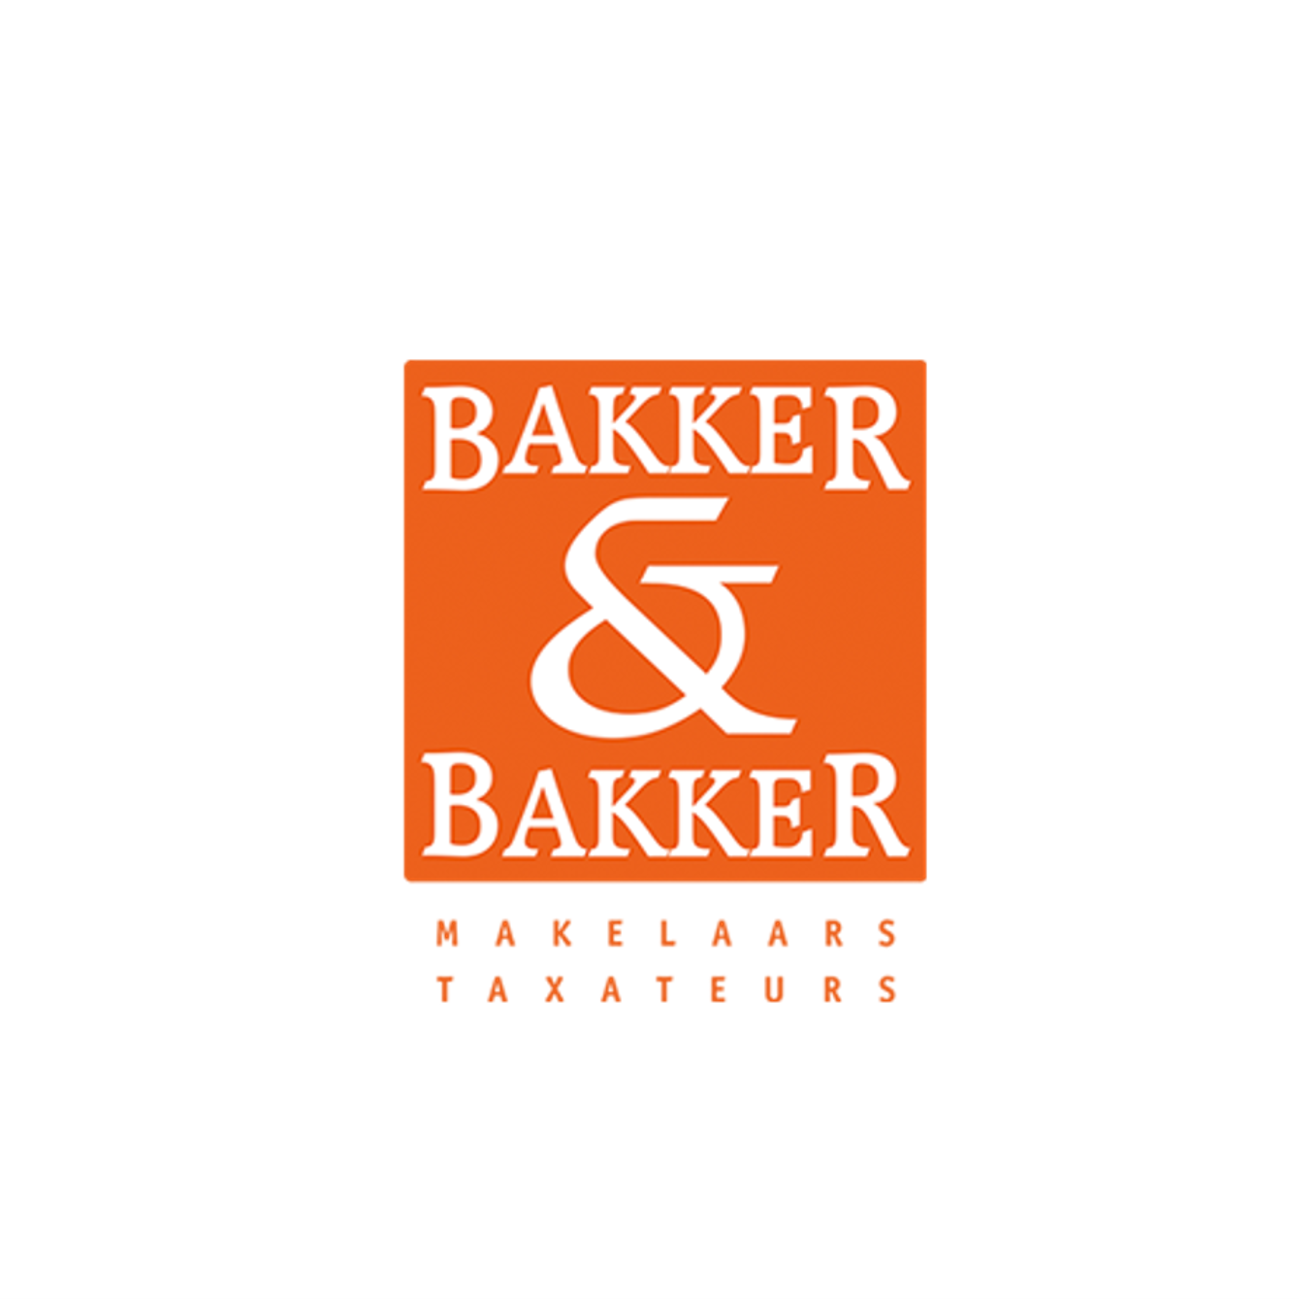 Bakker&Bakker makelaars en taxateurs is Capabel